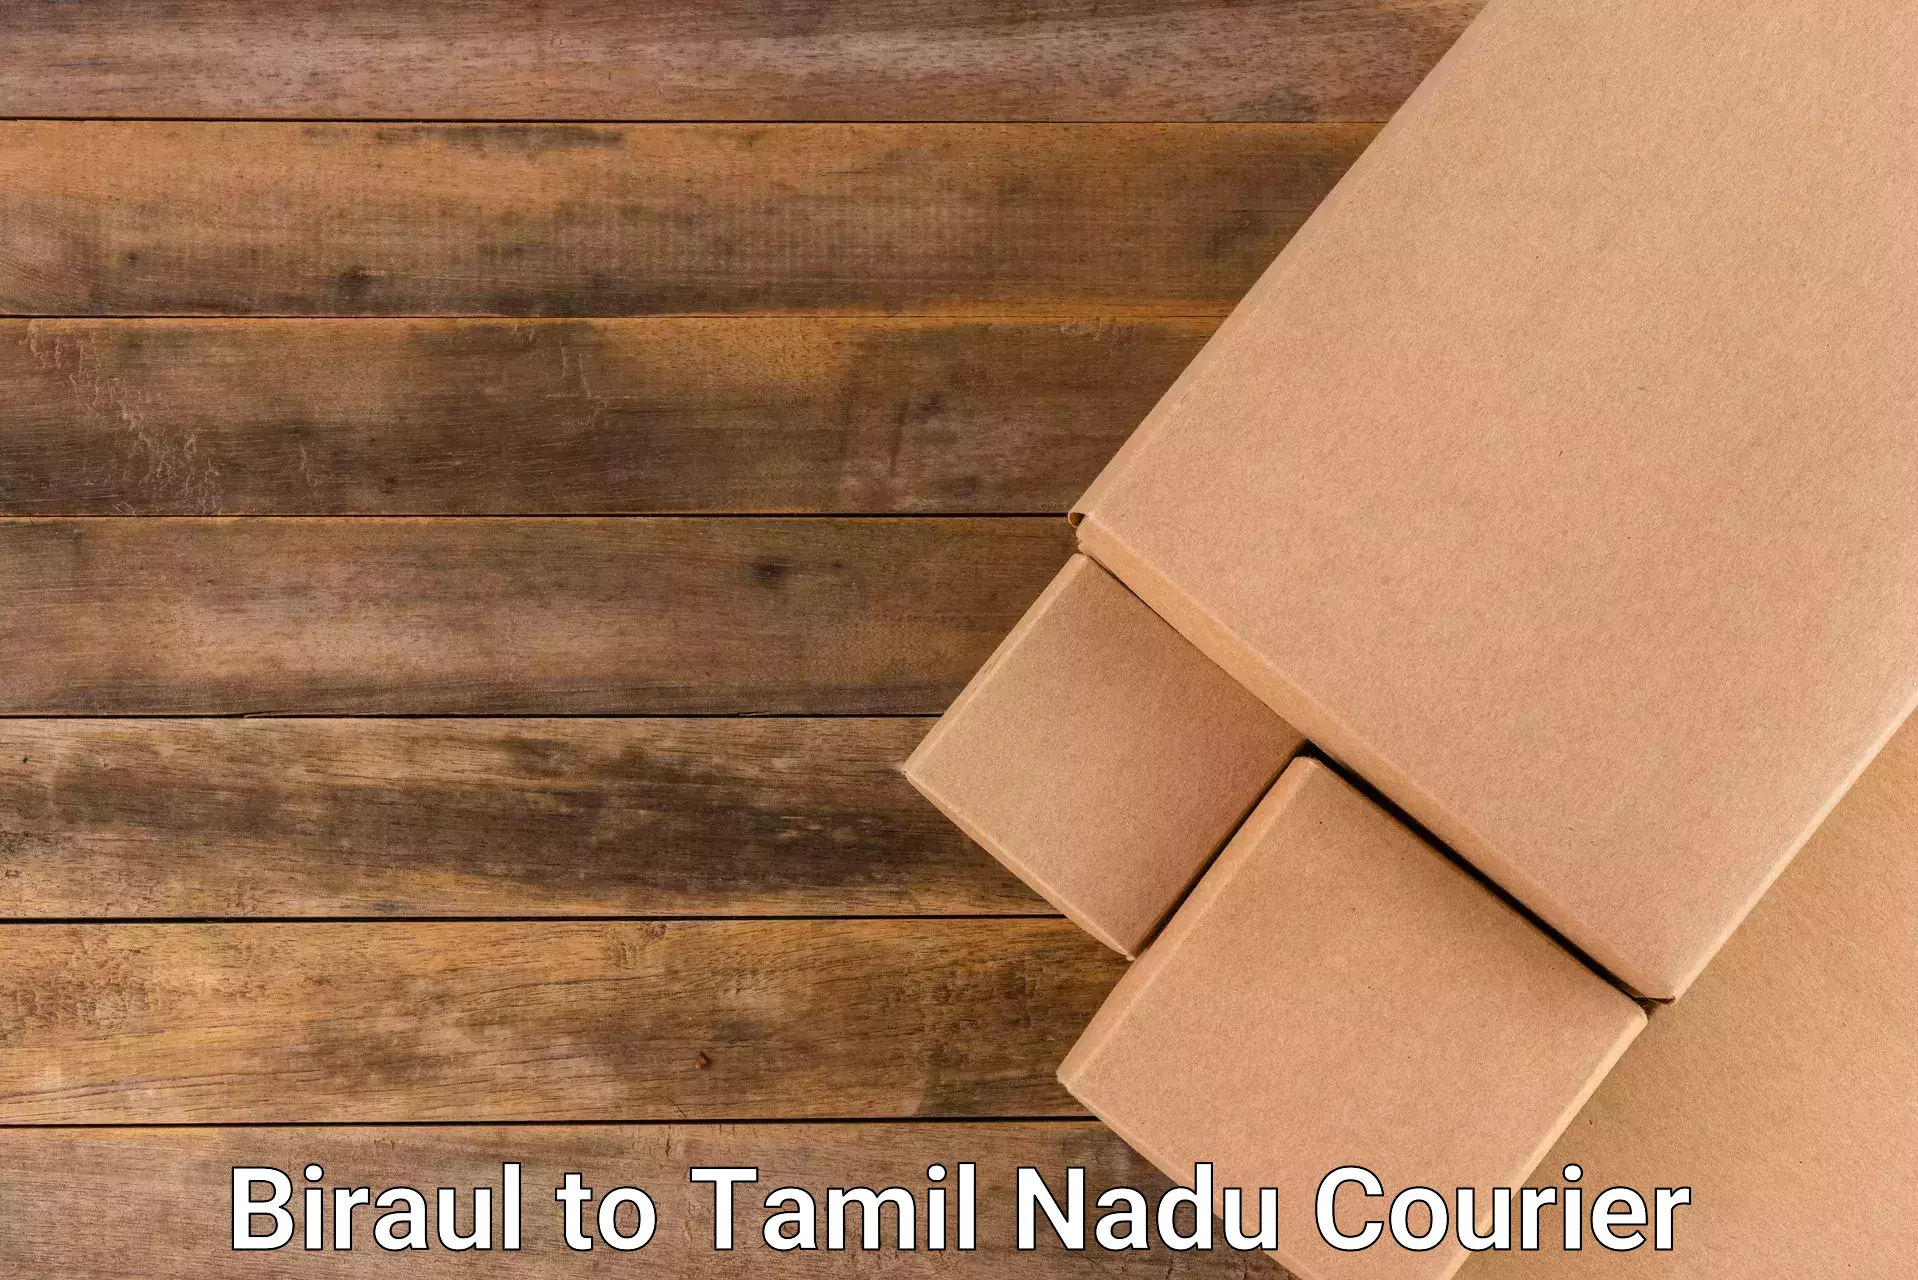 Efficient shipping platforms in Biraul to Tamil Nadu